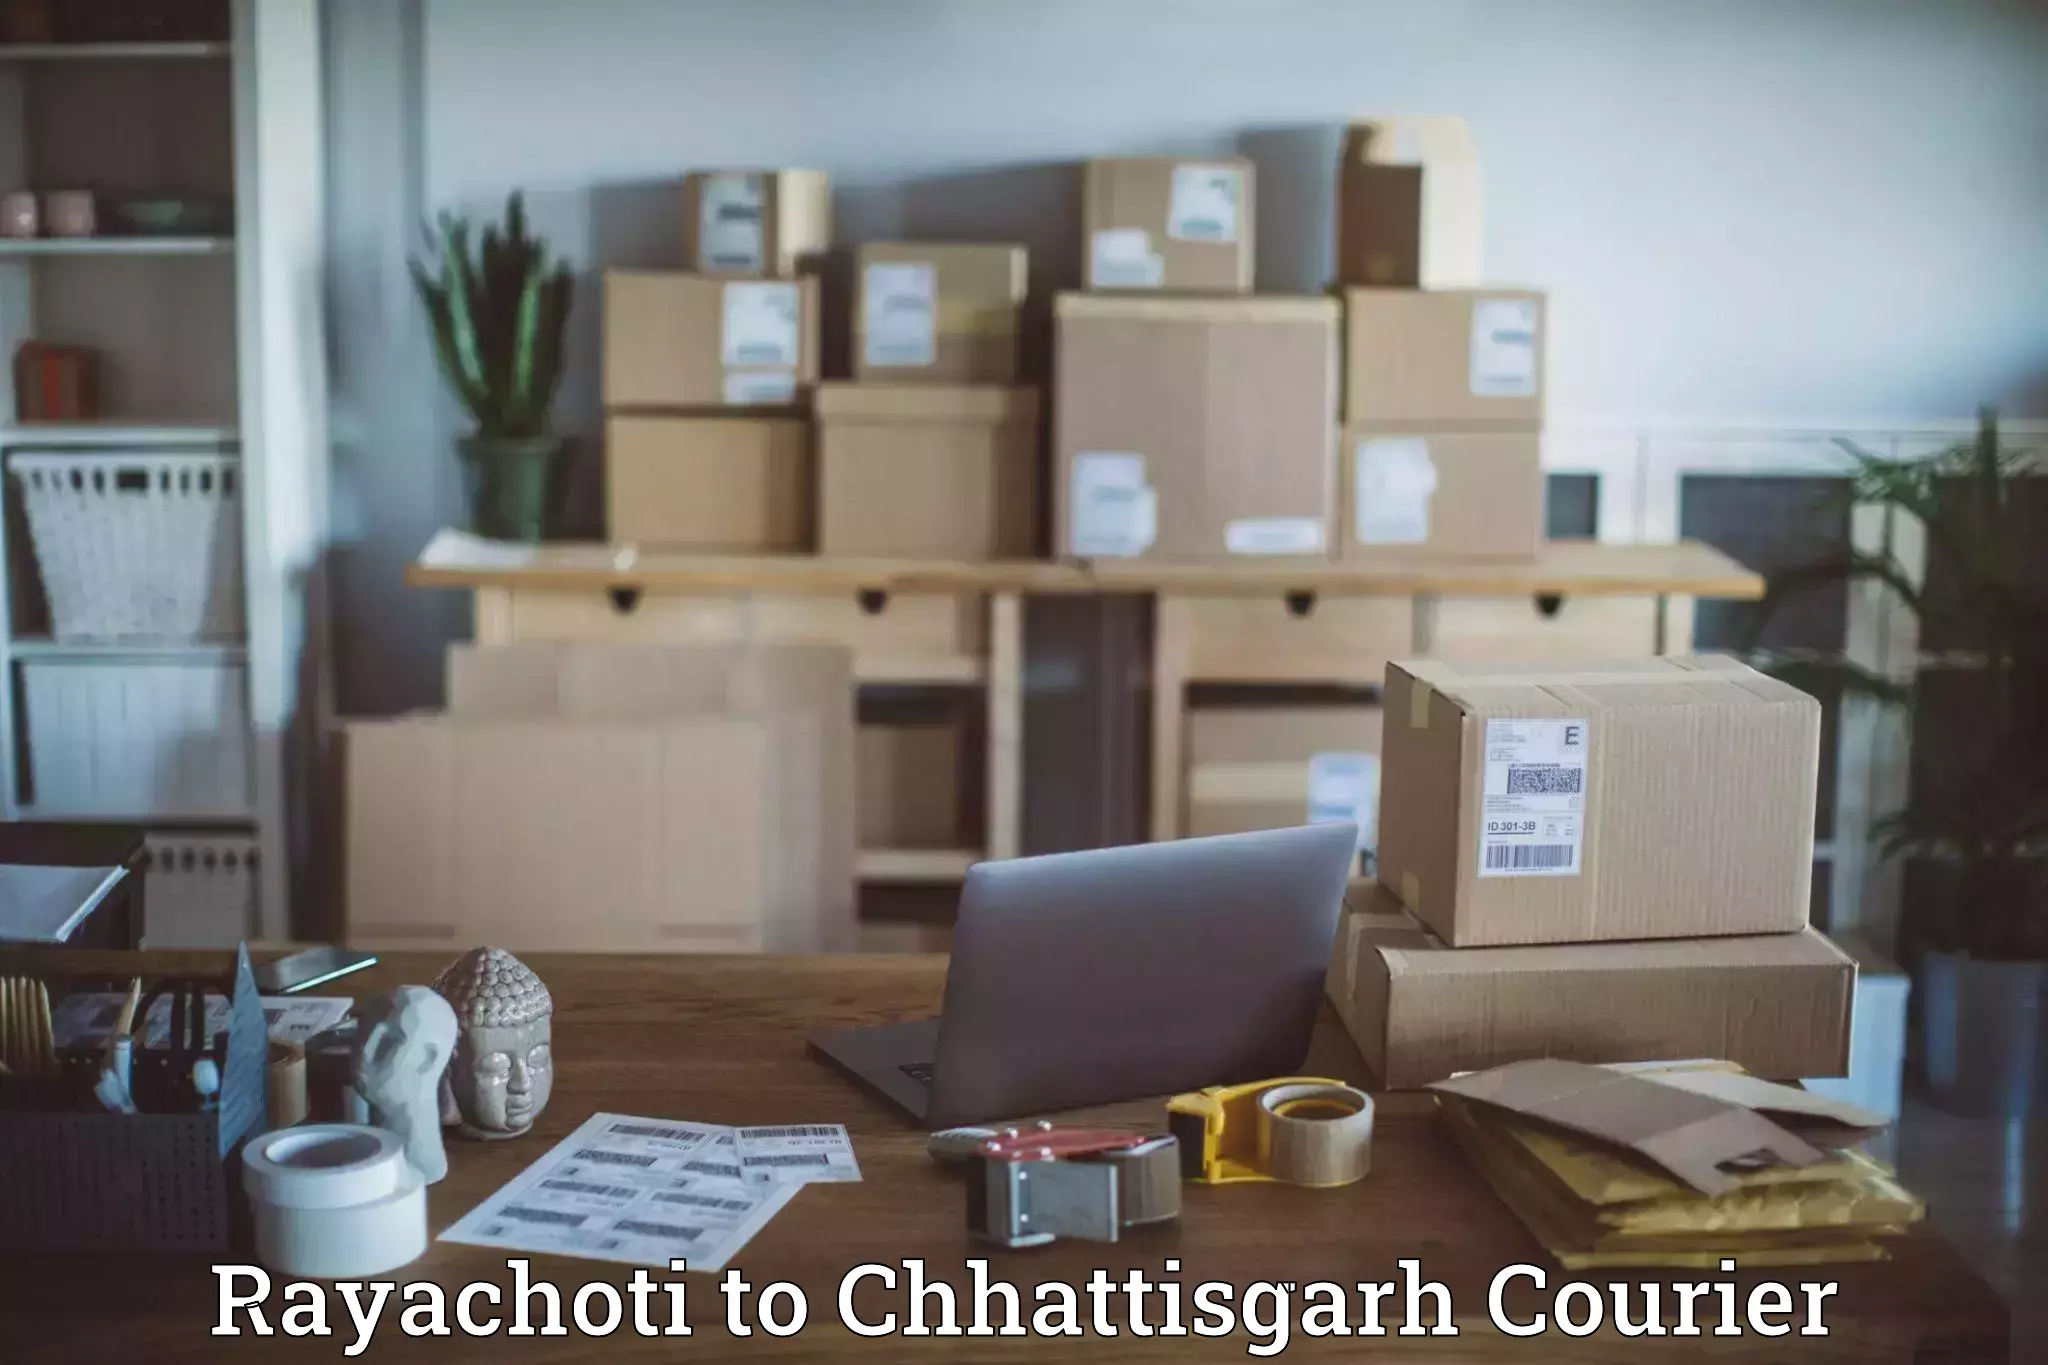 Courier service innovation Rayachoti to Raigarh Chhattisgarh